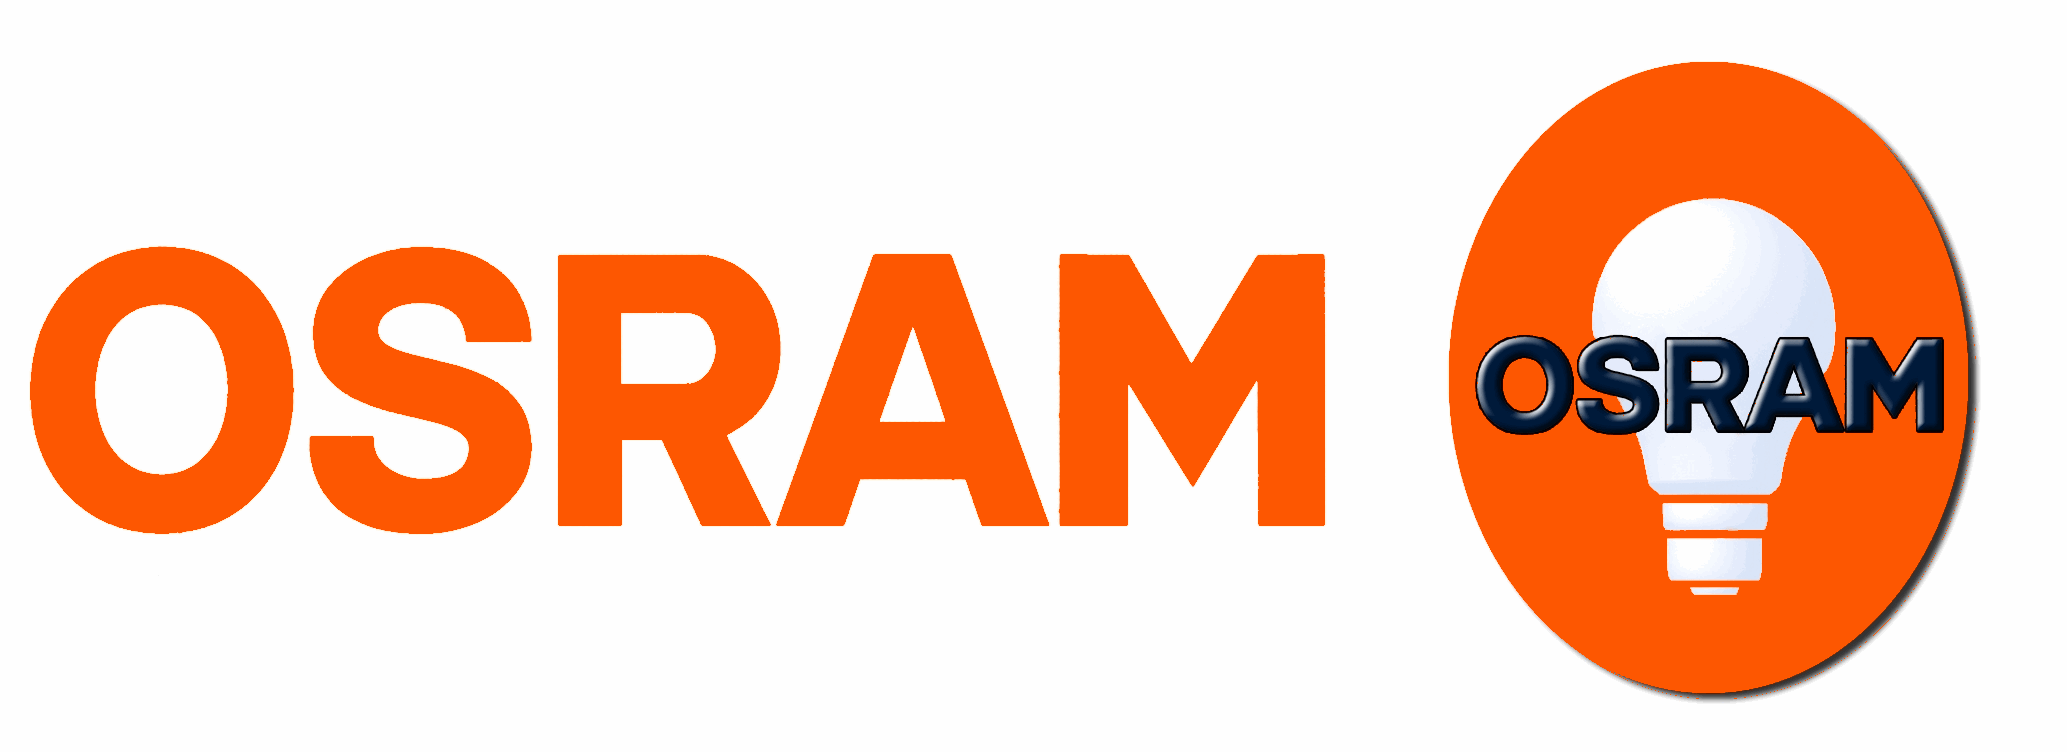 http://www.dakal.co.uk/uploads/events/osram-logo.gif